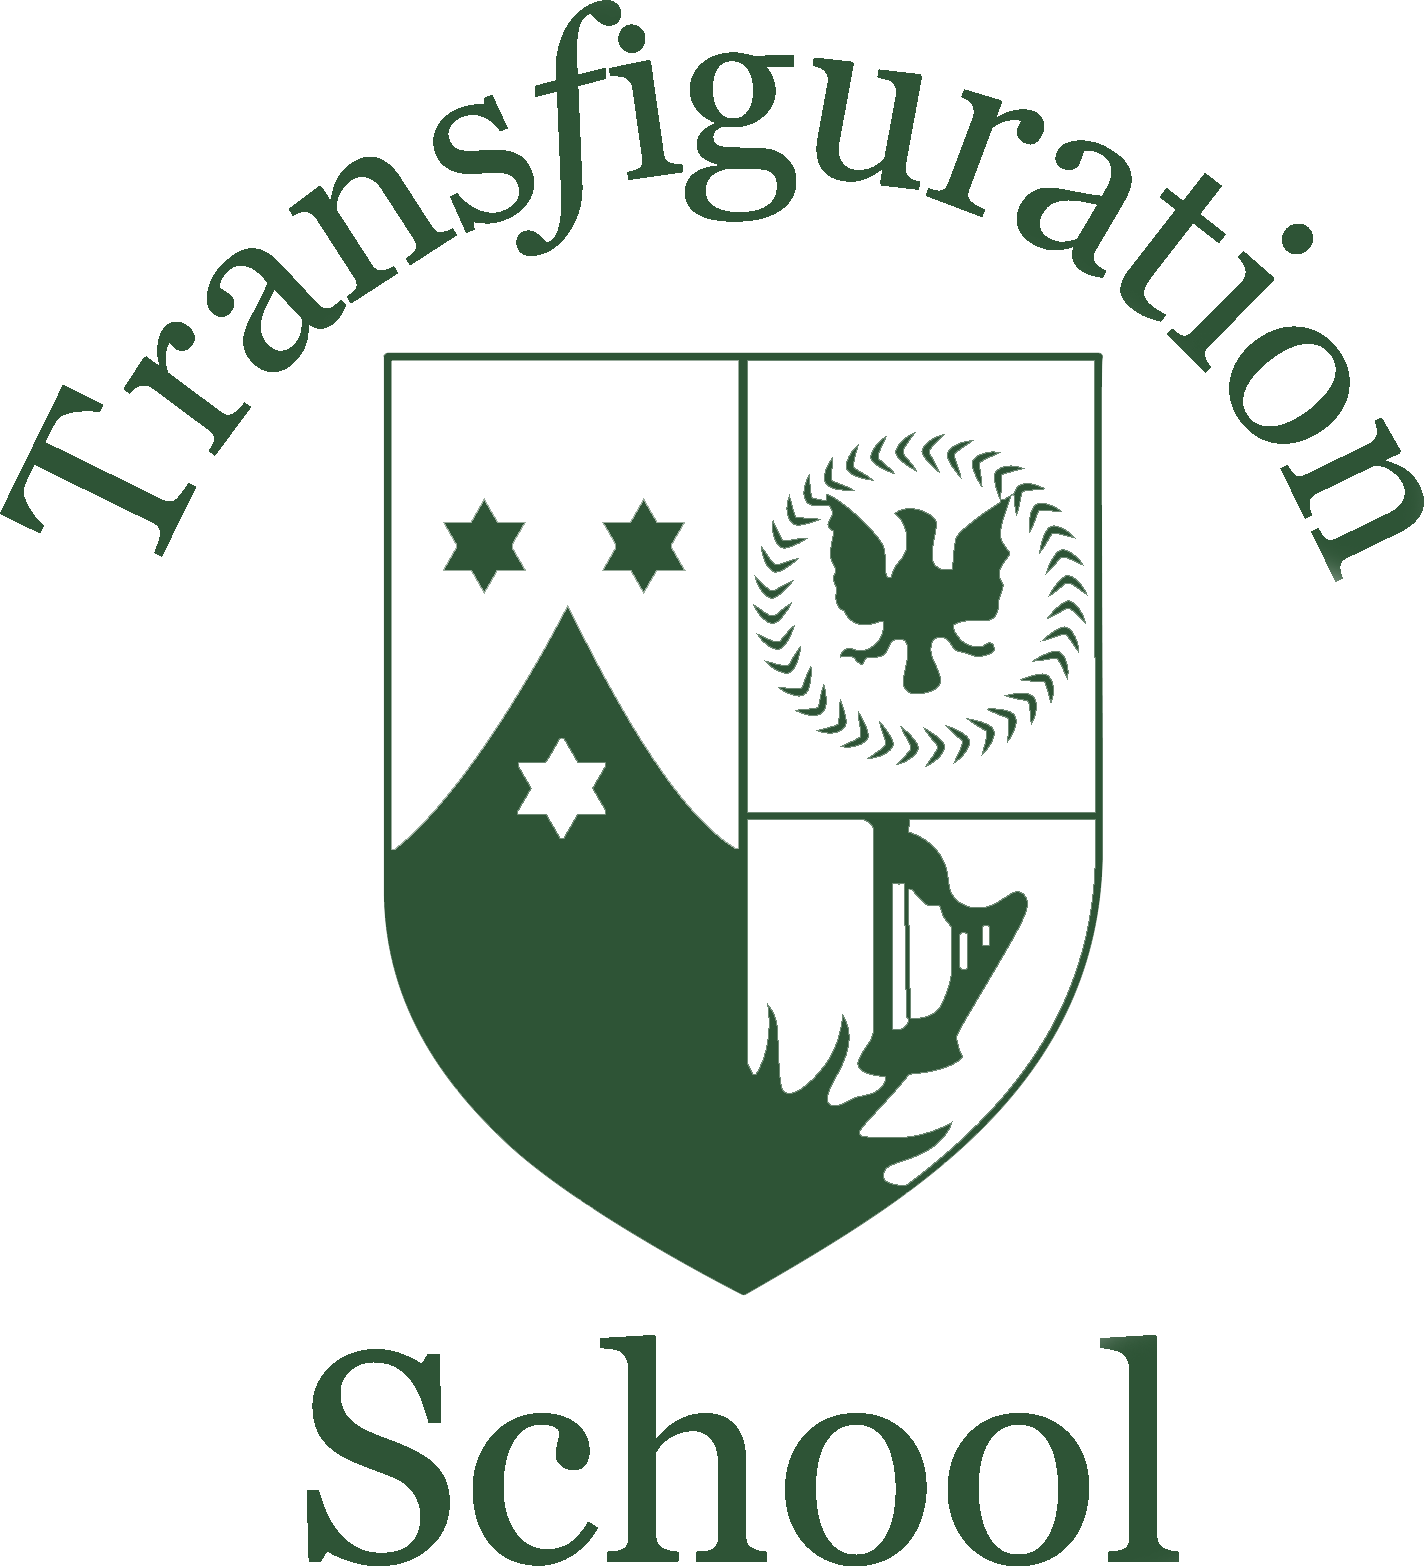 Transfiguration School